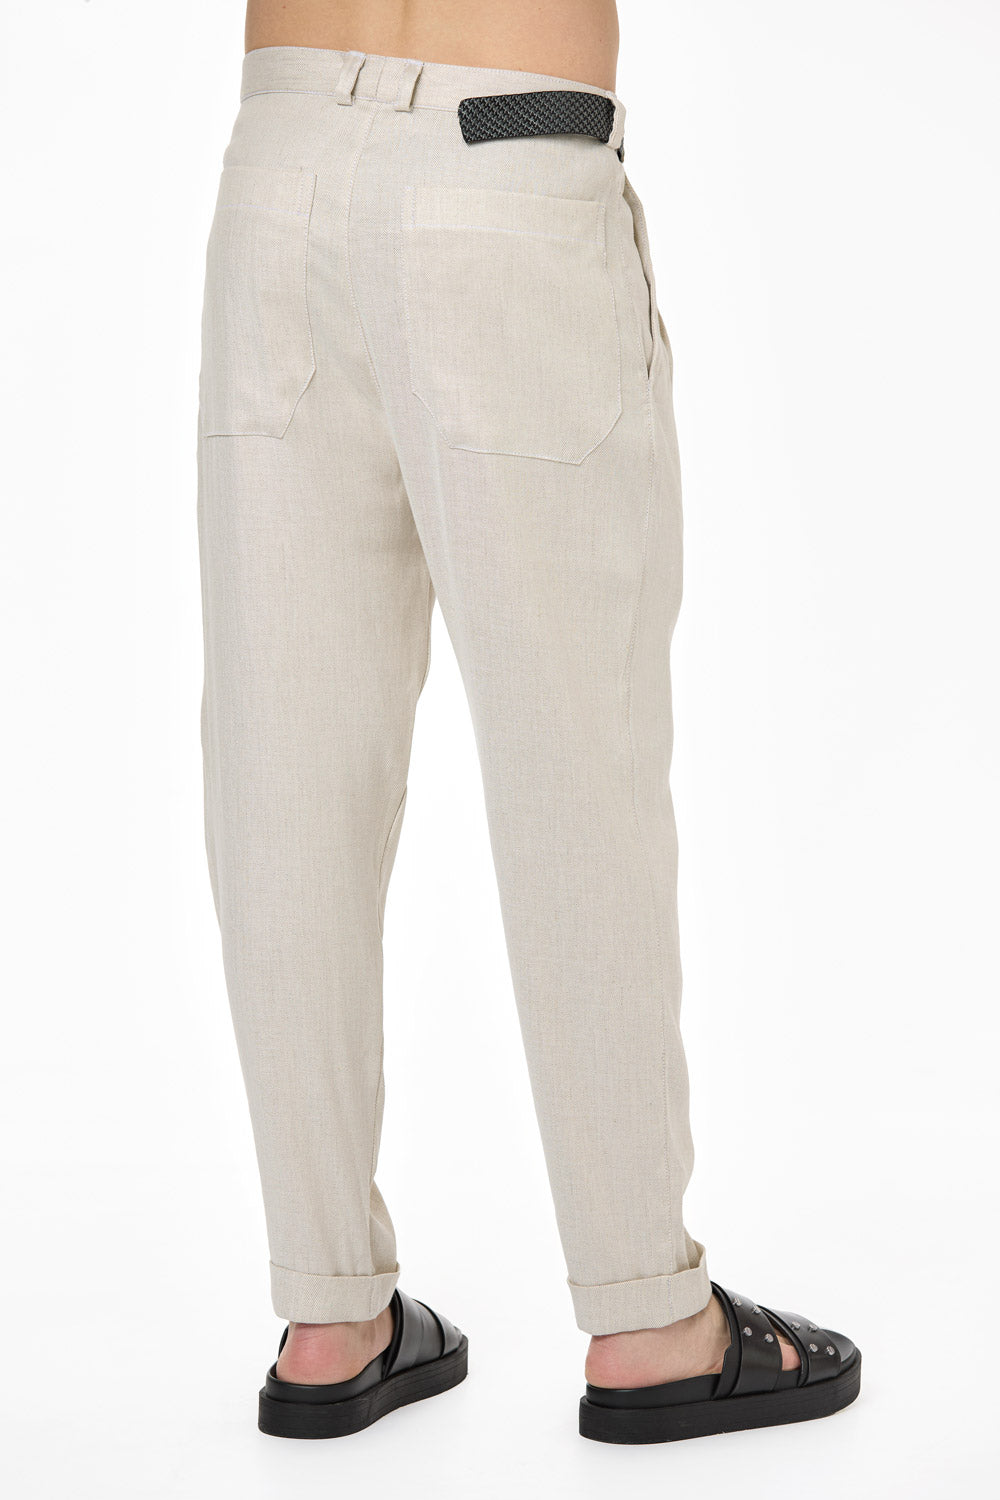 Cairo linen cream pants